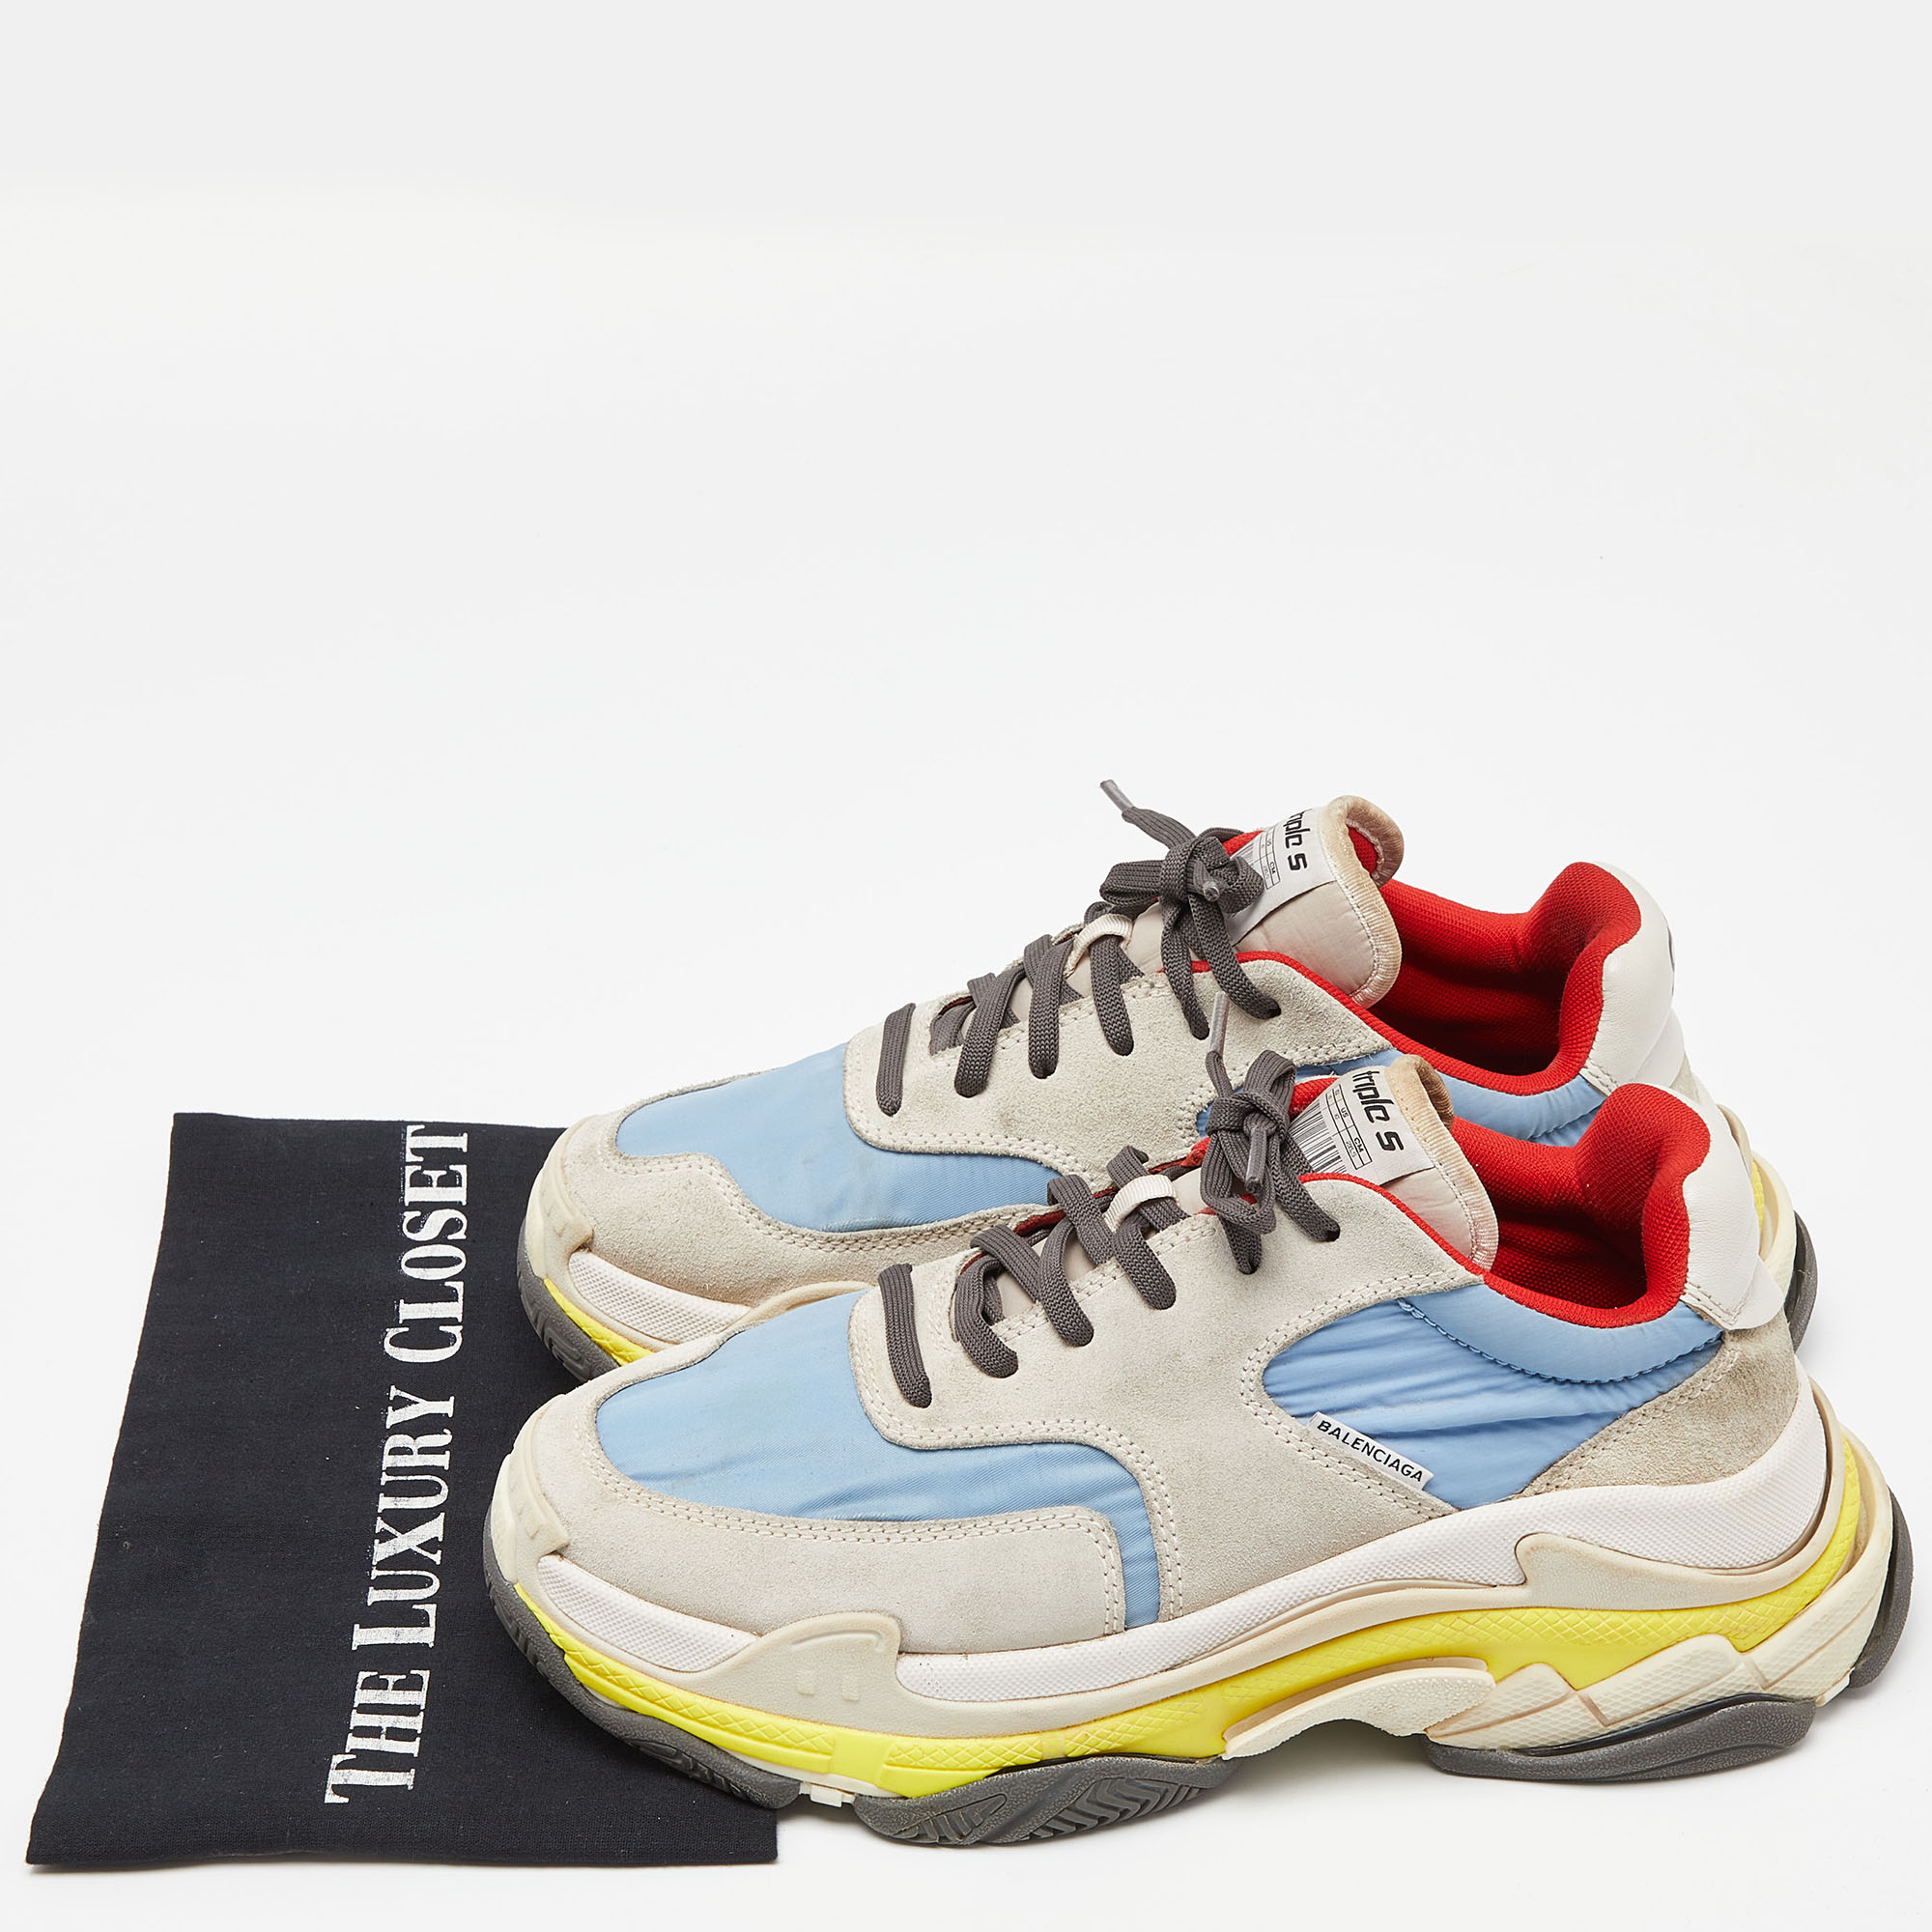 Balenciaga Multicolor Nylon And Suede Triple S Sneakers Size 40